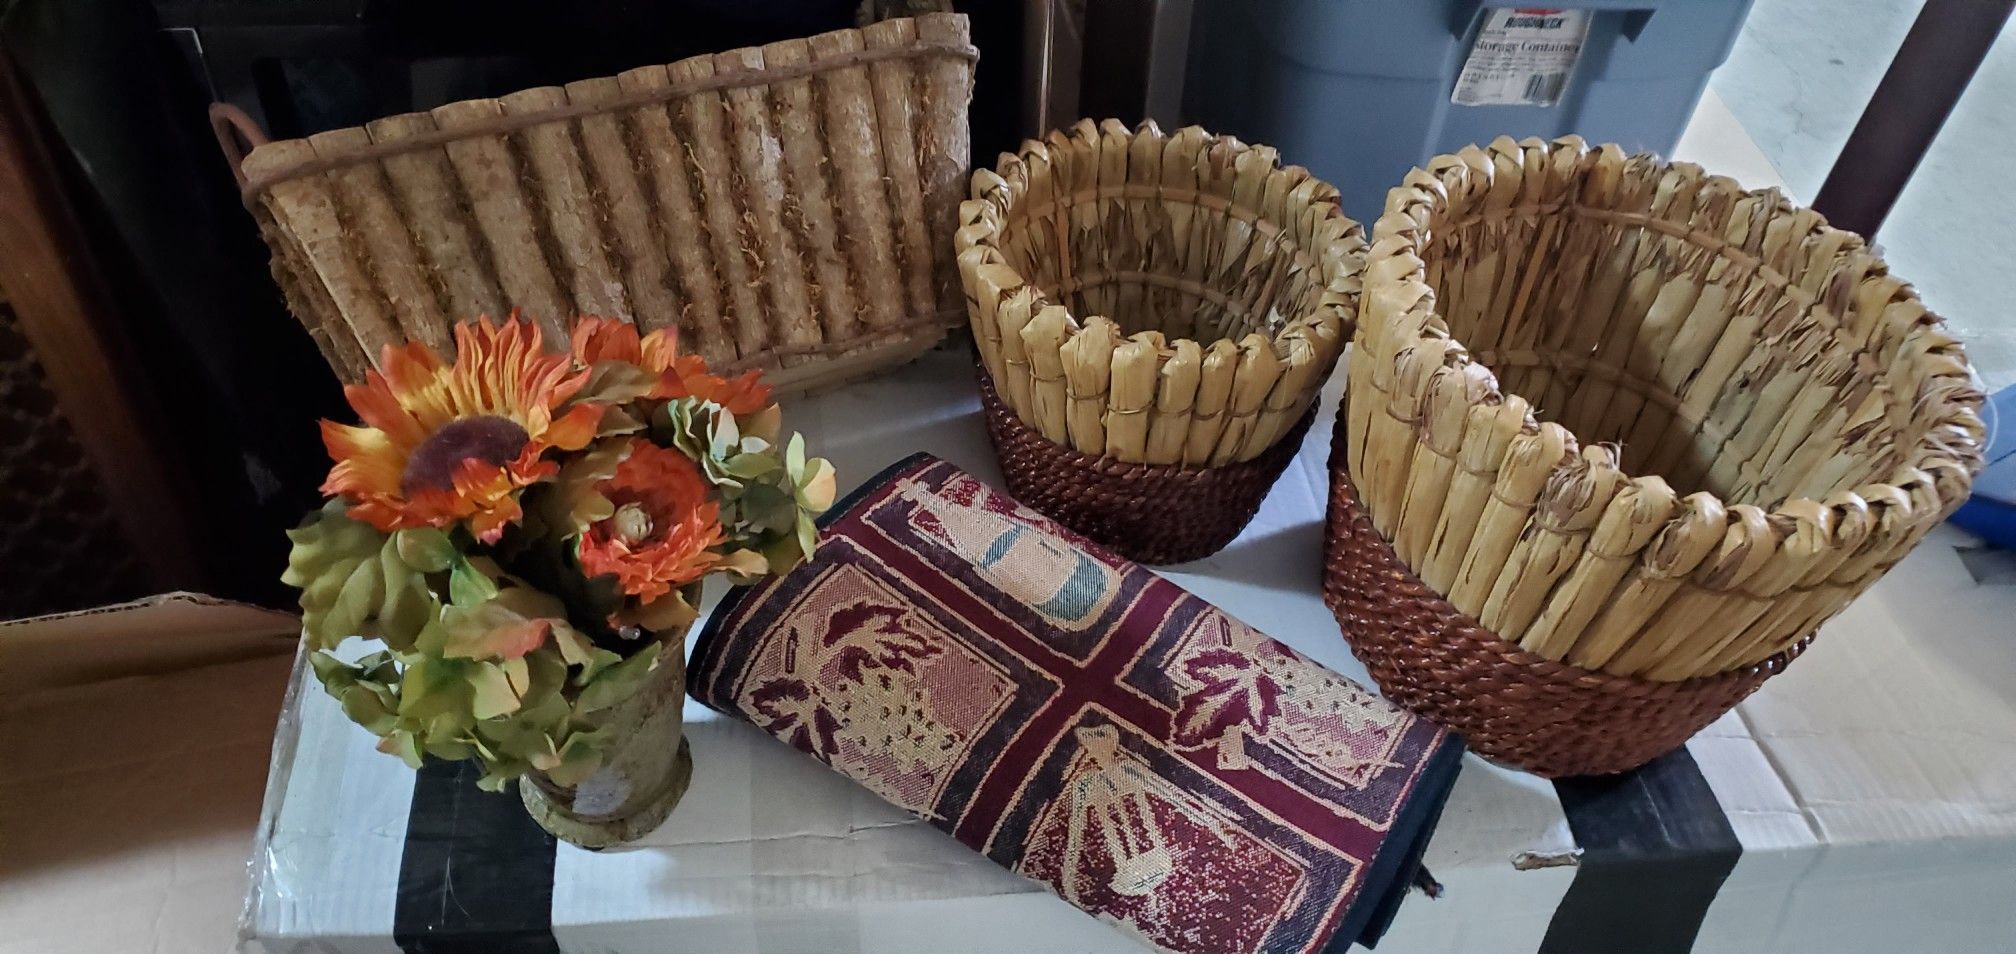 Baskets, table runner, artificial flower vase